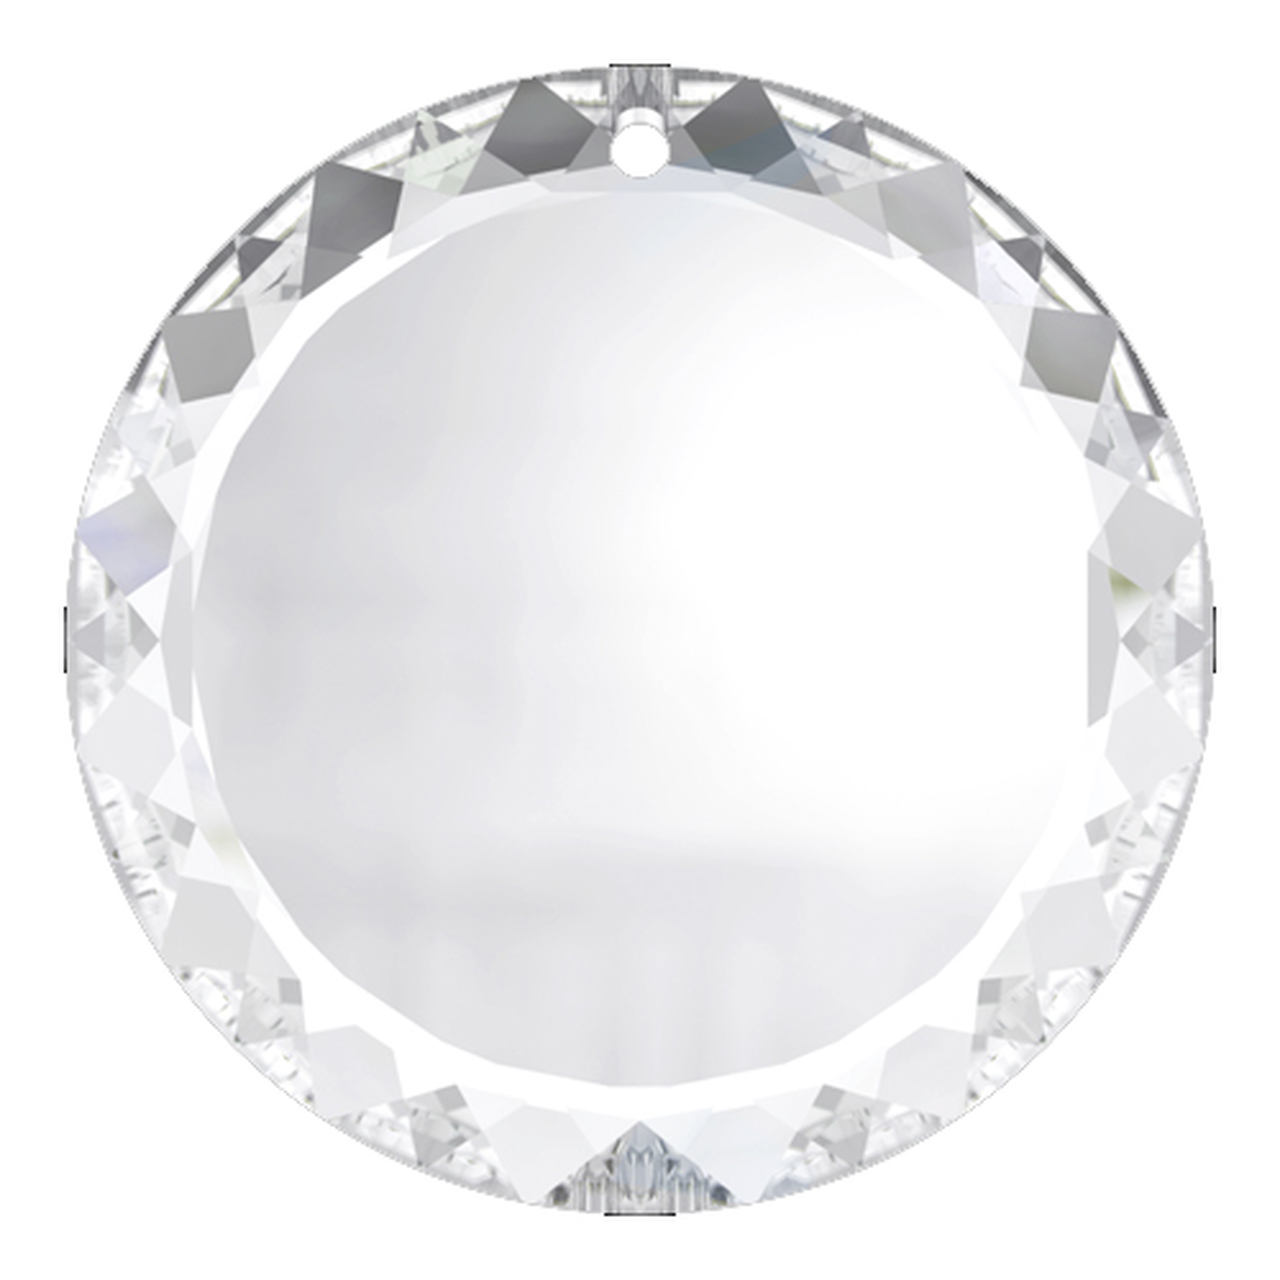 Swarovski Pendant, 30 mm, Color: Crystal (1 piece)Code: 6049-MM30